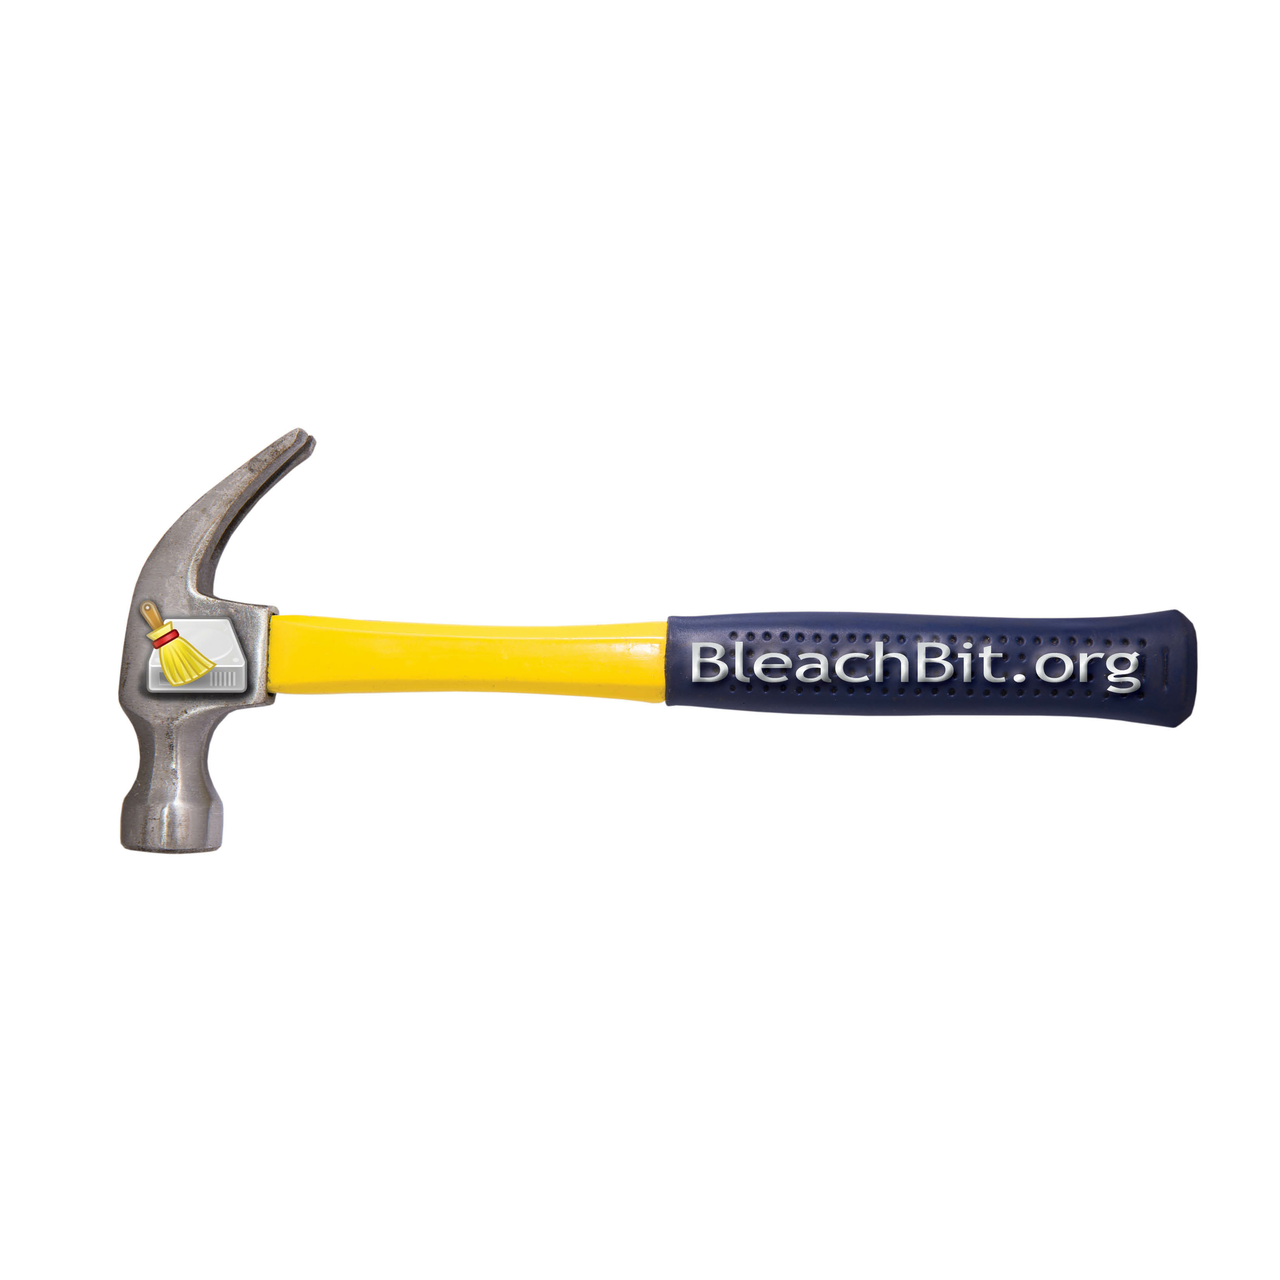 BleachBit 4.6.0 for windows download free